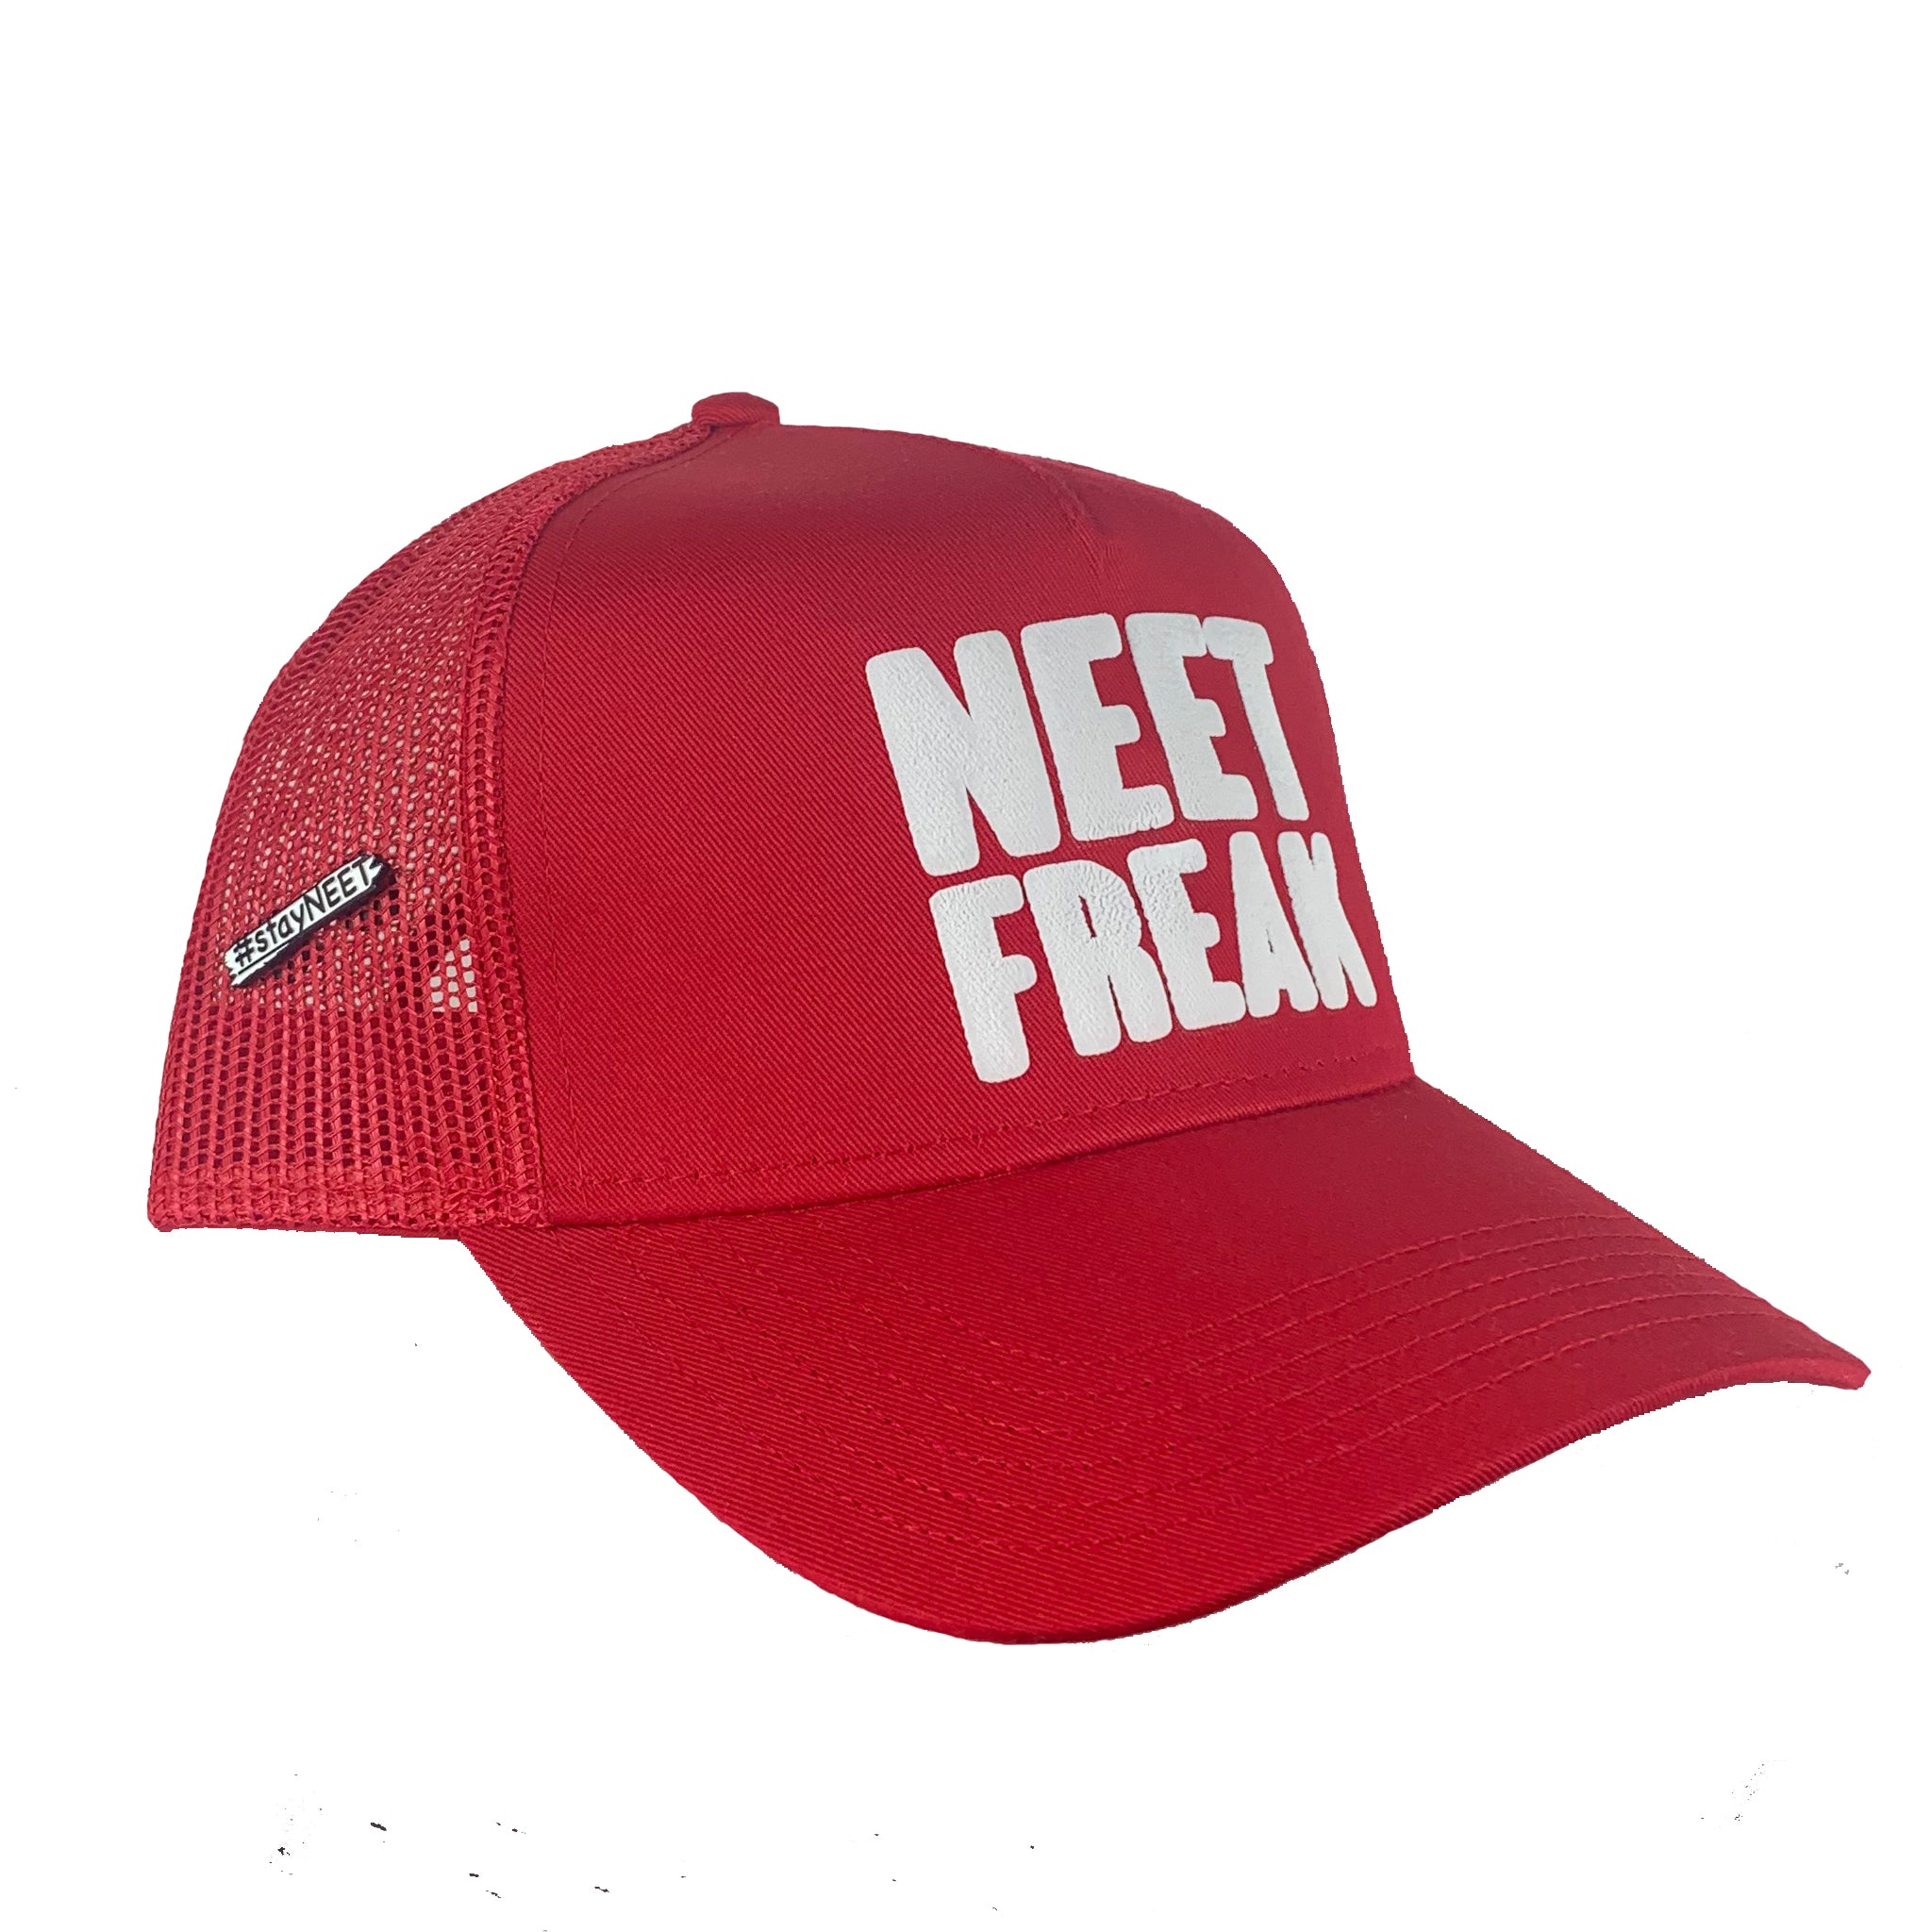 Red/White Mesh Trucker Hat